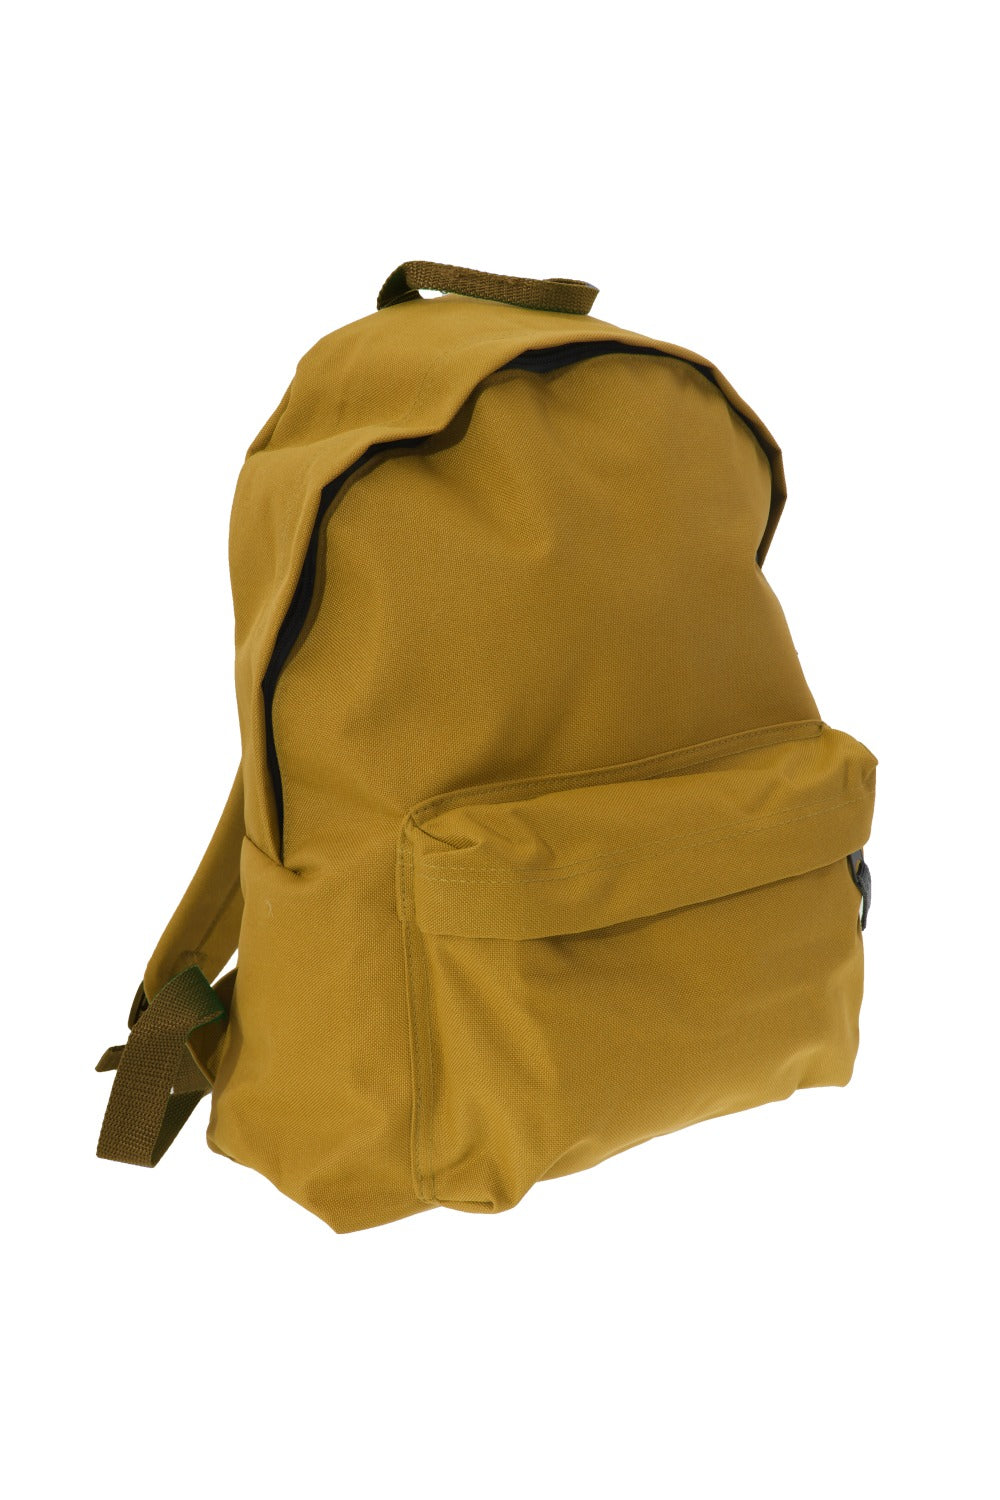 Fashion Backpack/Rucksack,18 Liters - Mustard